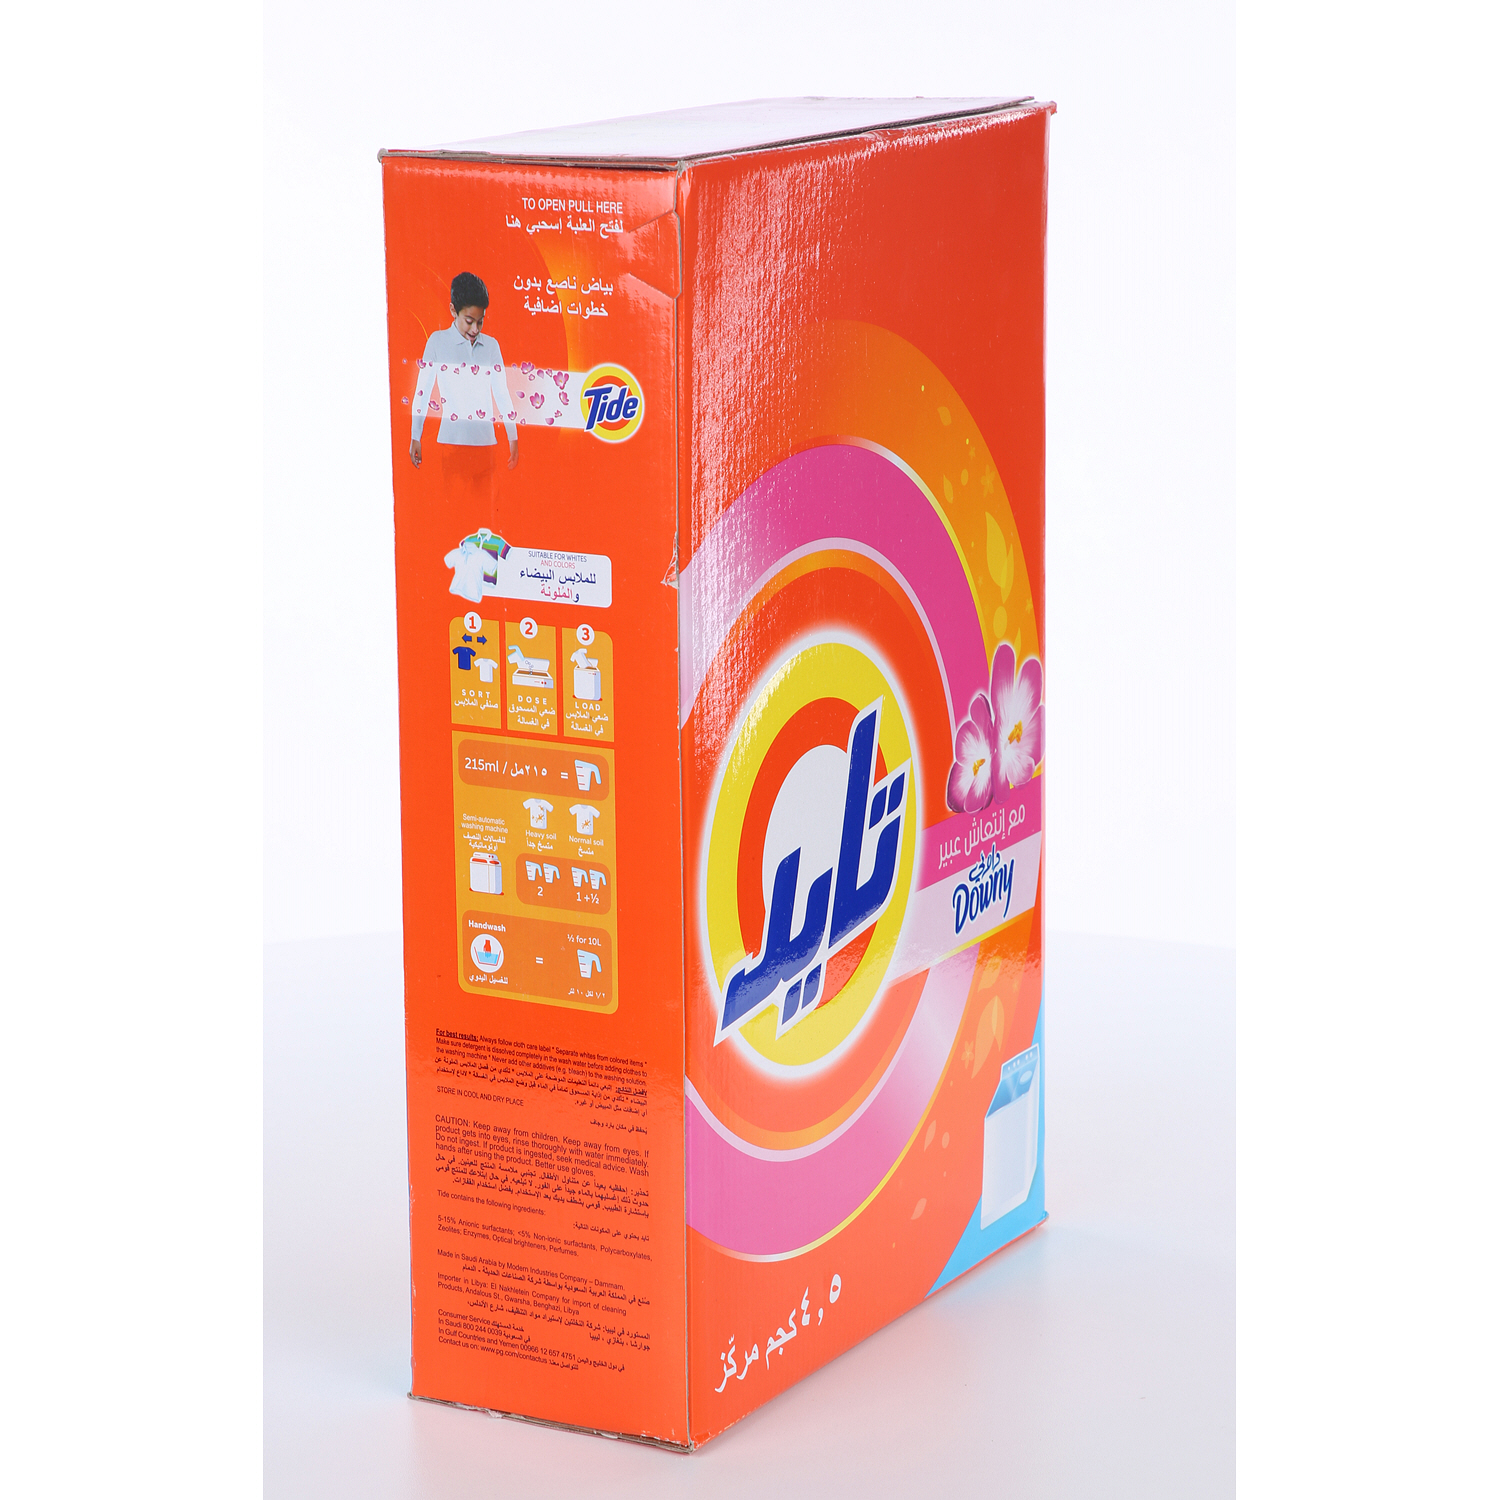 Tide Detergent with Downy Freshness 4.5 Kg